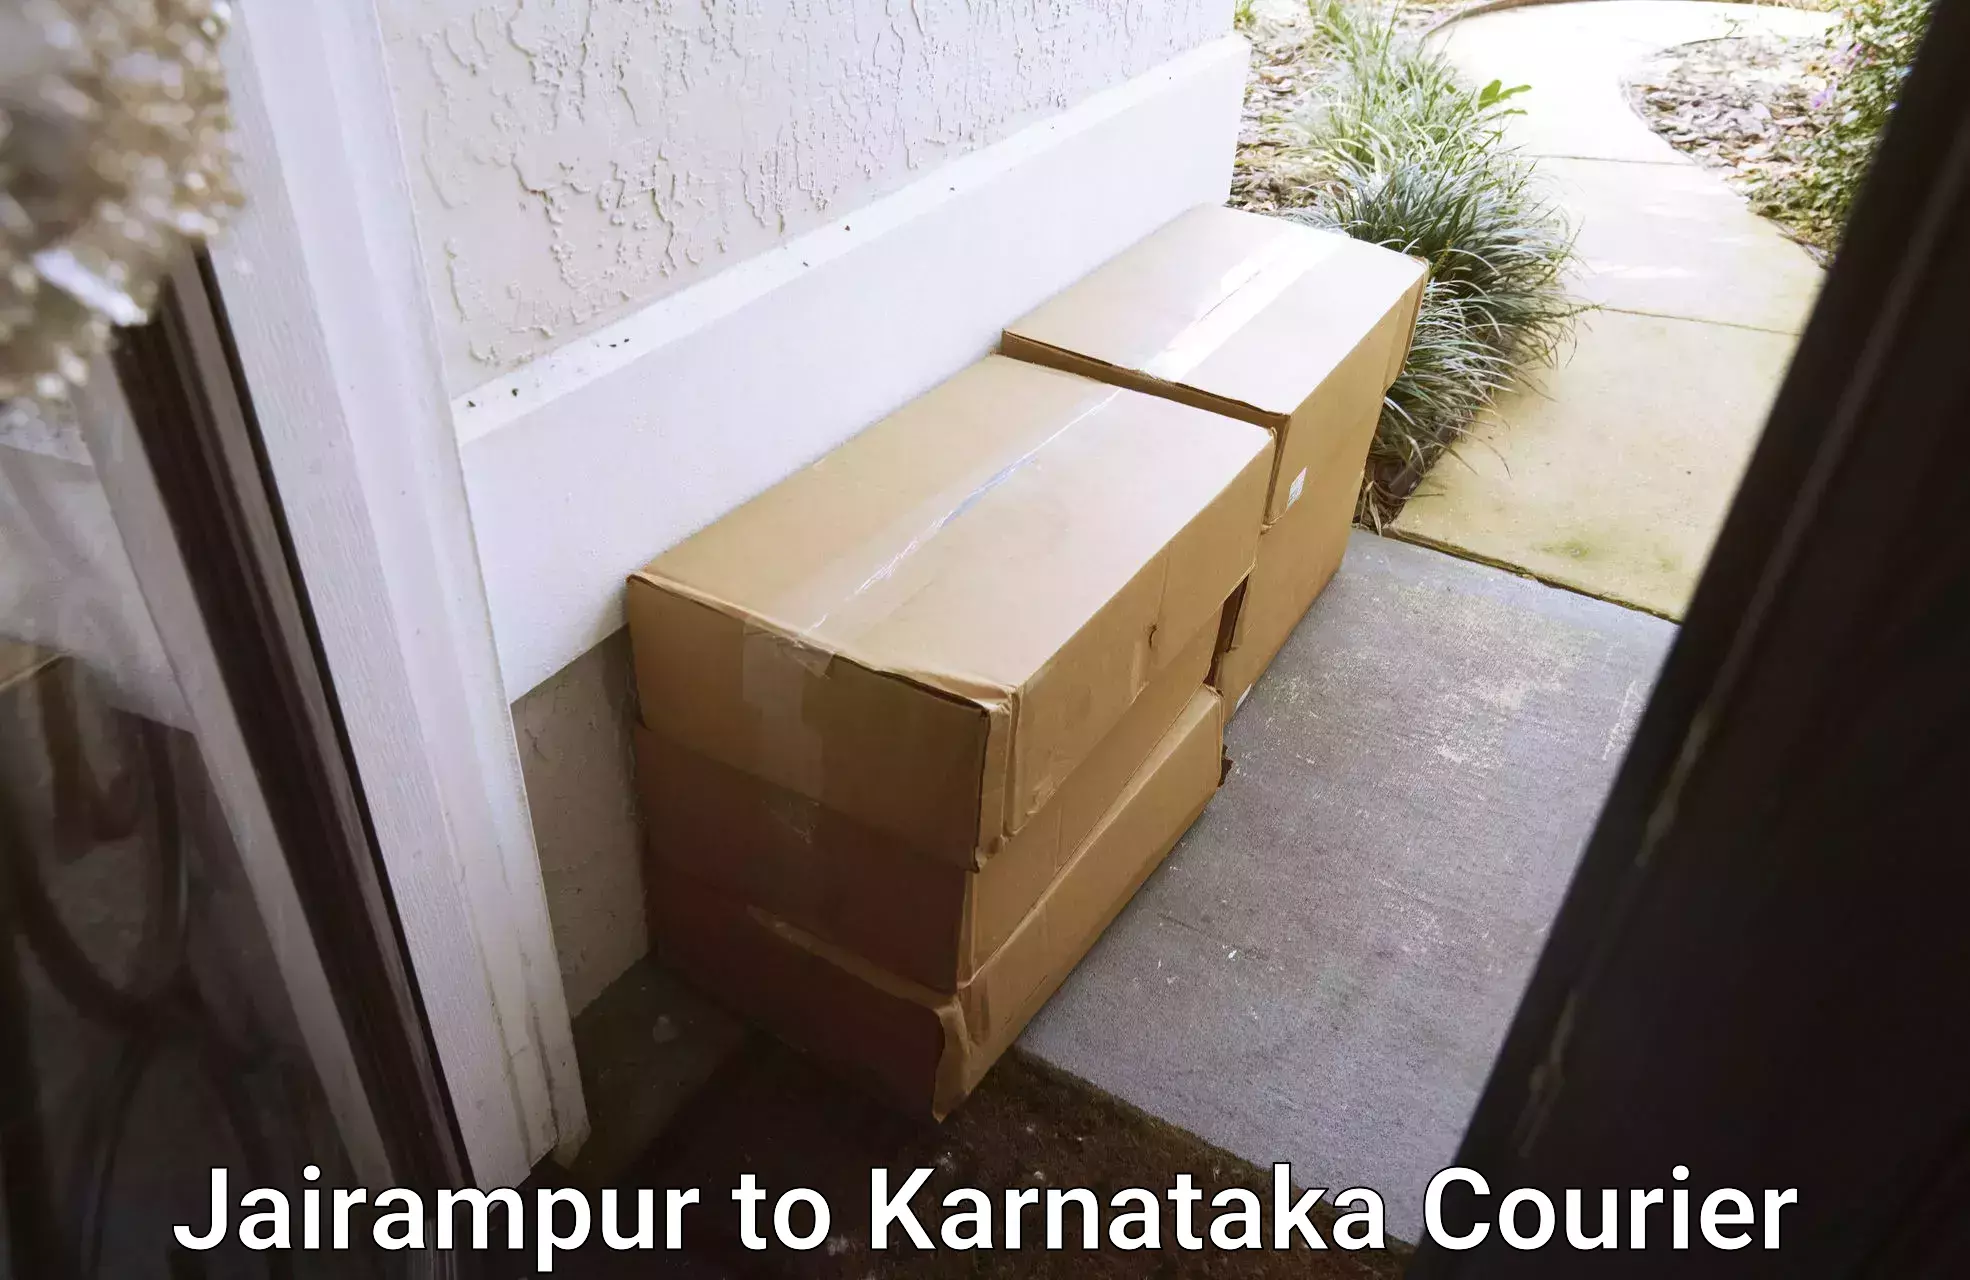 High-capacity parcel service Jairampur to Karnataka